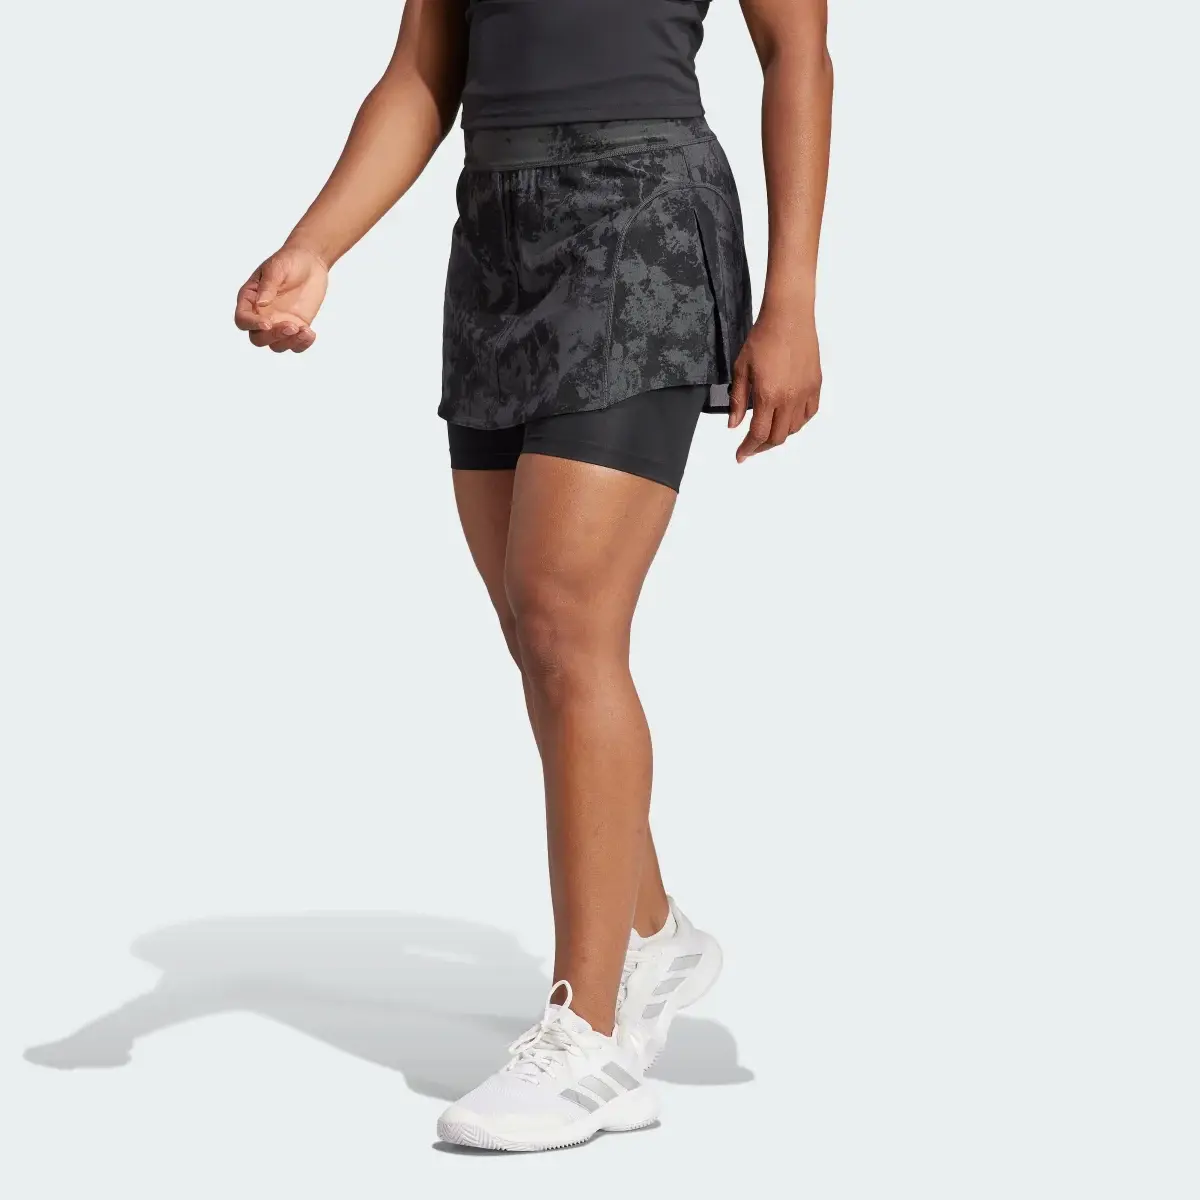 Adidas Tennis Paris Match Skirt. 1